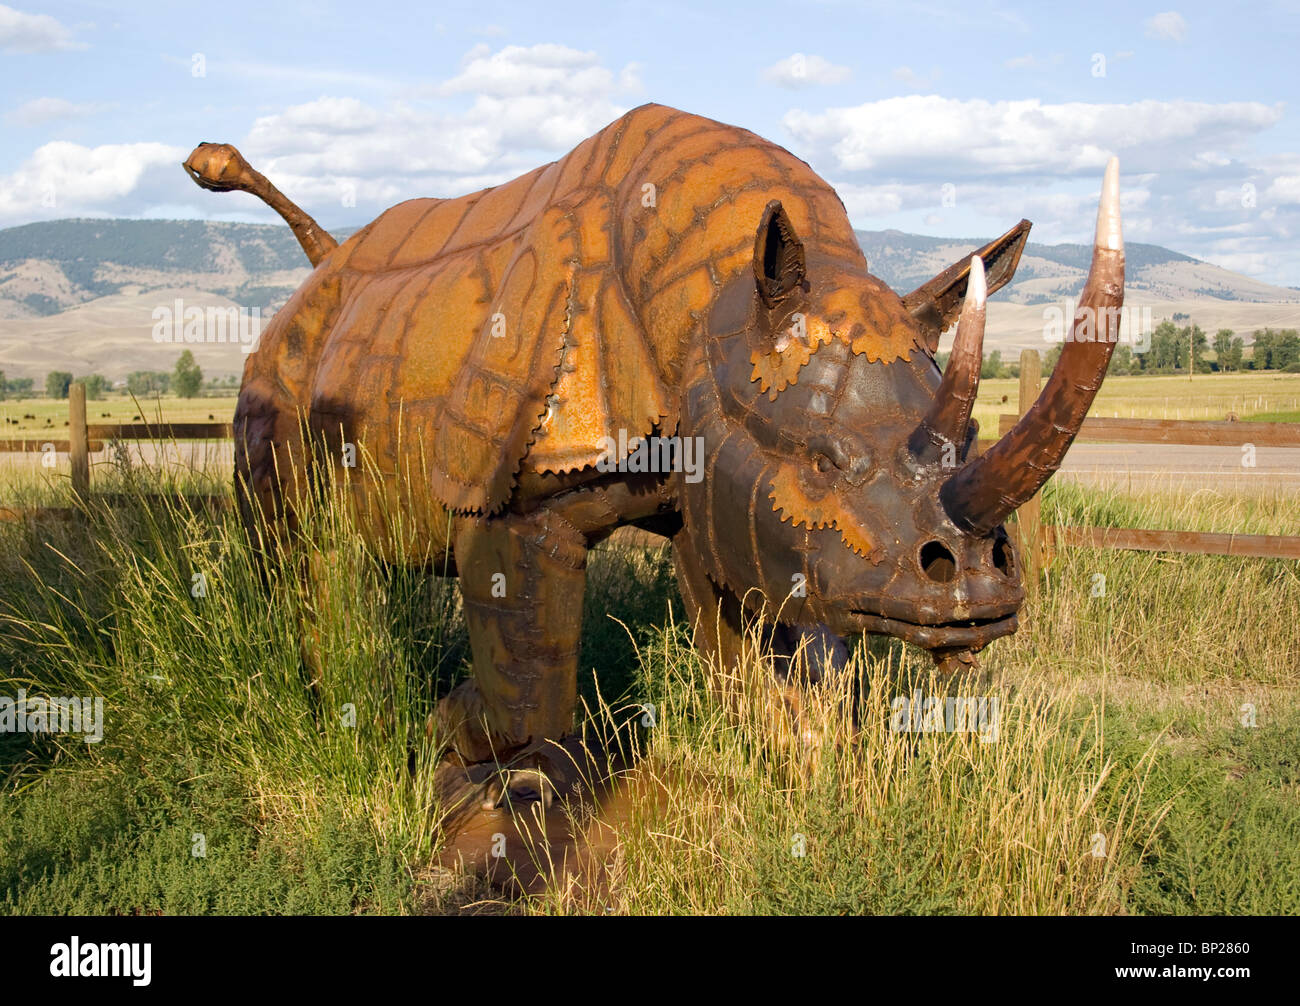 Animal metal sculptures by artist Bill Ohrmann in Drummond Montana Stock Photo